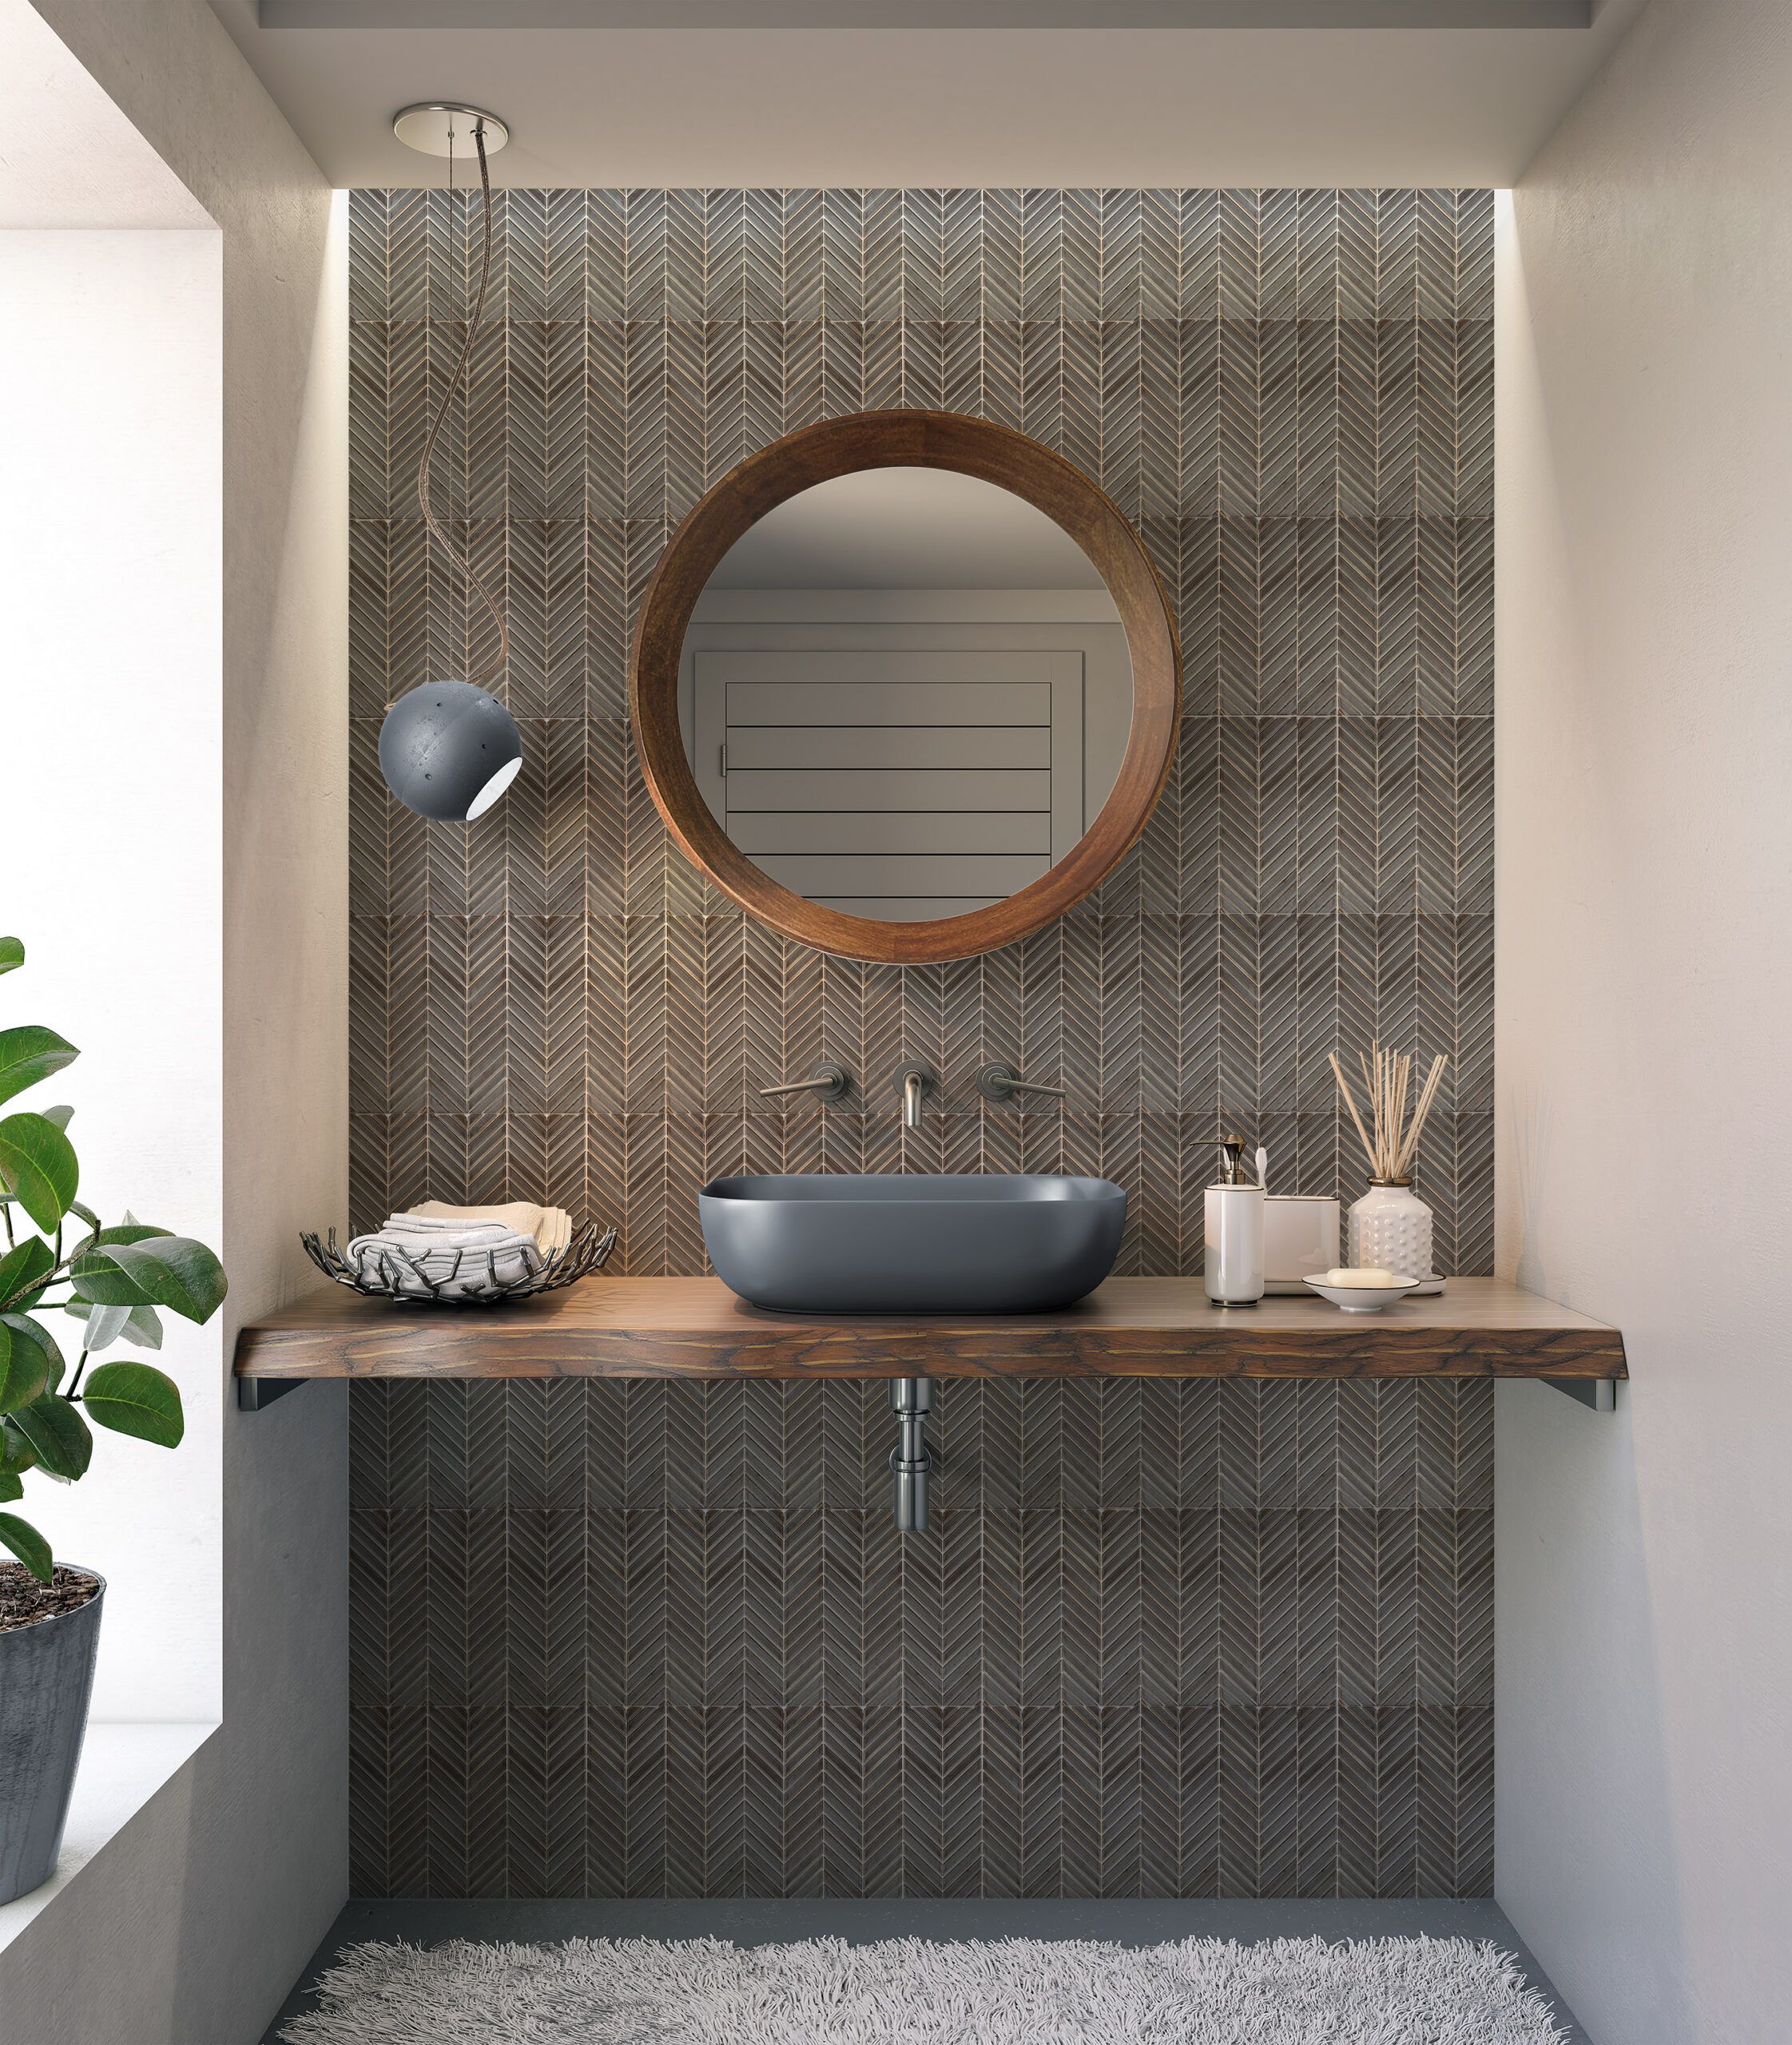 <img src=“Herinbon-mockup-Lumin-Bath-Full-wall-lr-scaled.jpg” alt=“Bathroom sink with faucet and circular mirror, Lumin mosaic tile on wall”/>